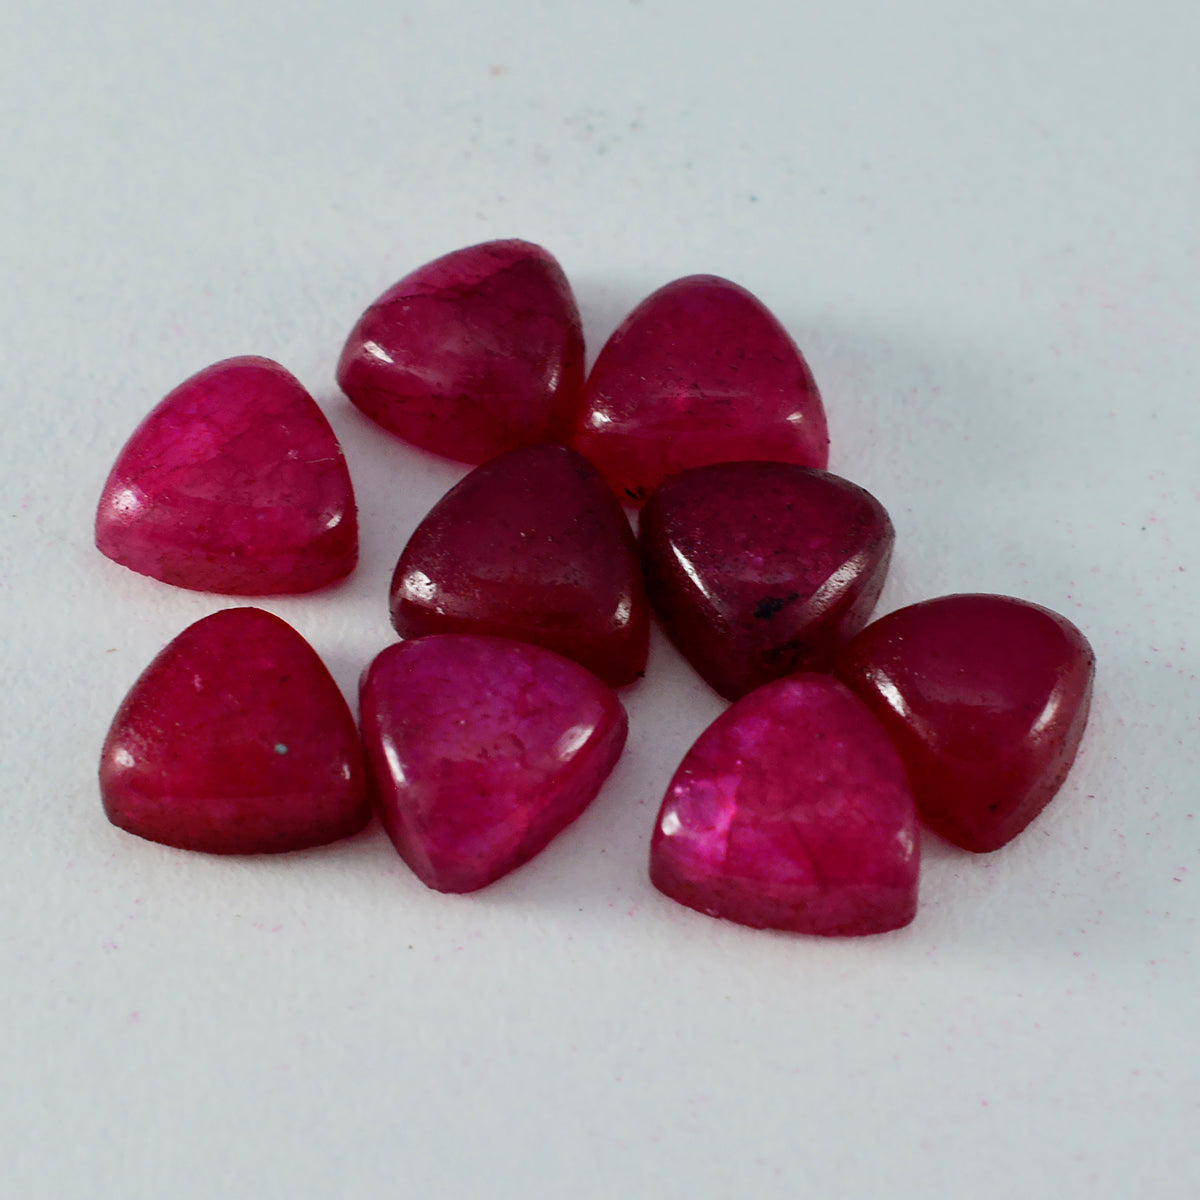 Riyogems 1PC Red Jasper Cabochon 6x6 mm Trillion Shape excellent Quality Loose Gems